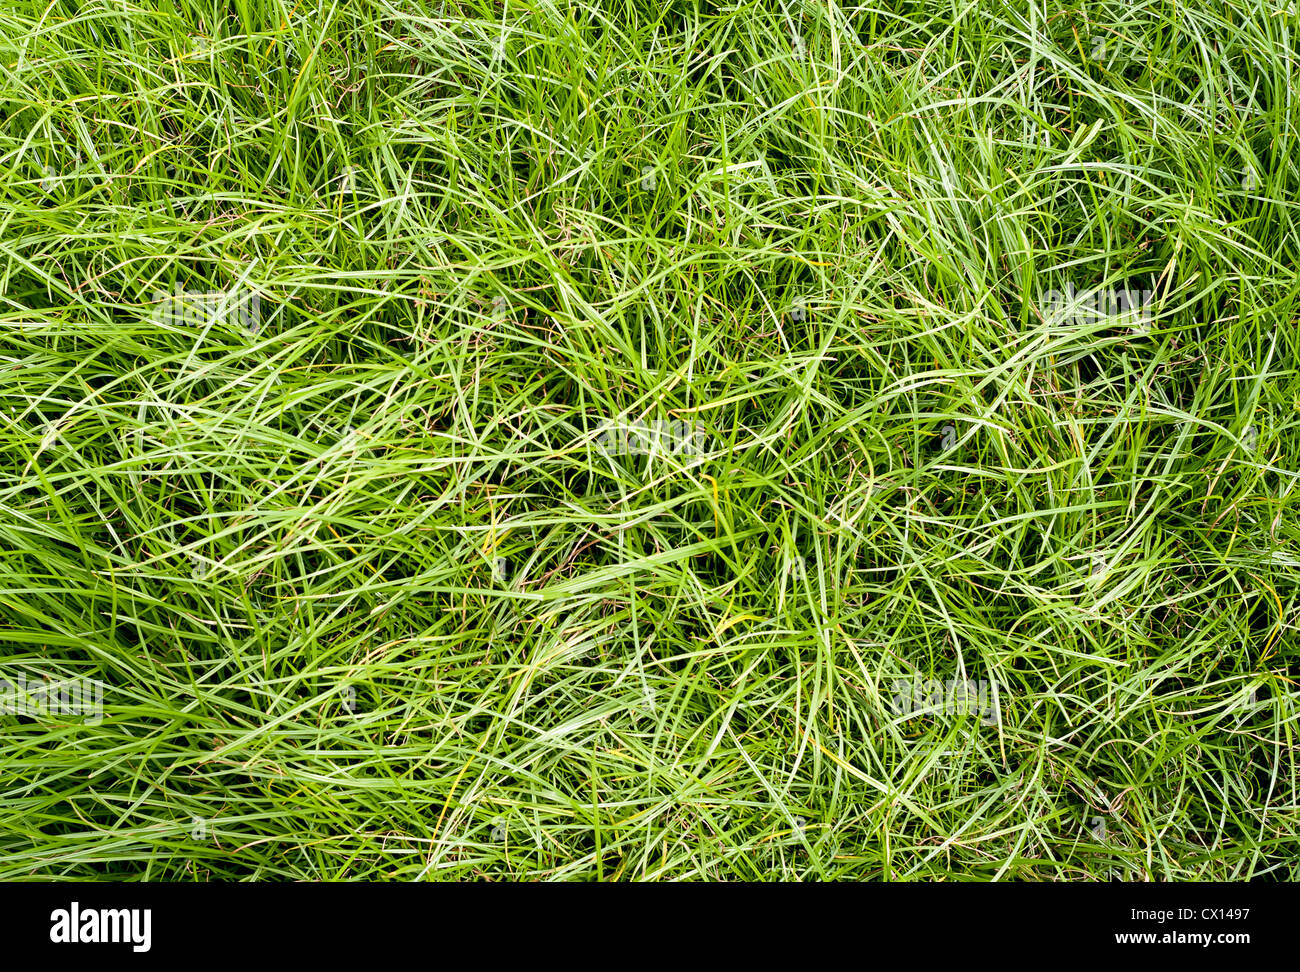 Green long grass texture pattren on ground Stock Photo